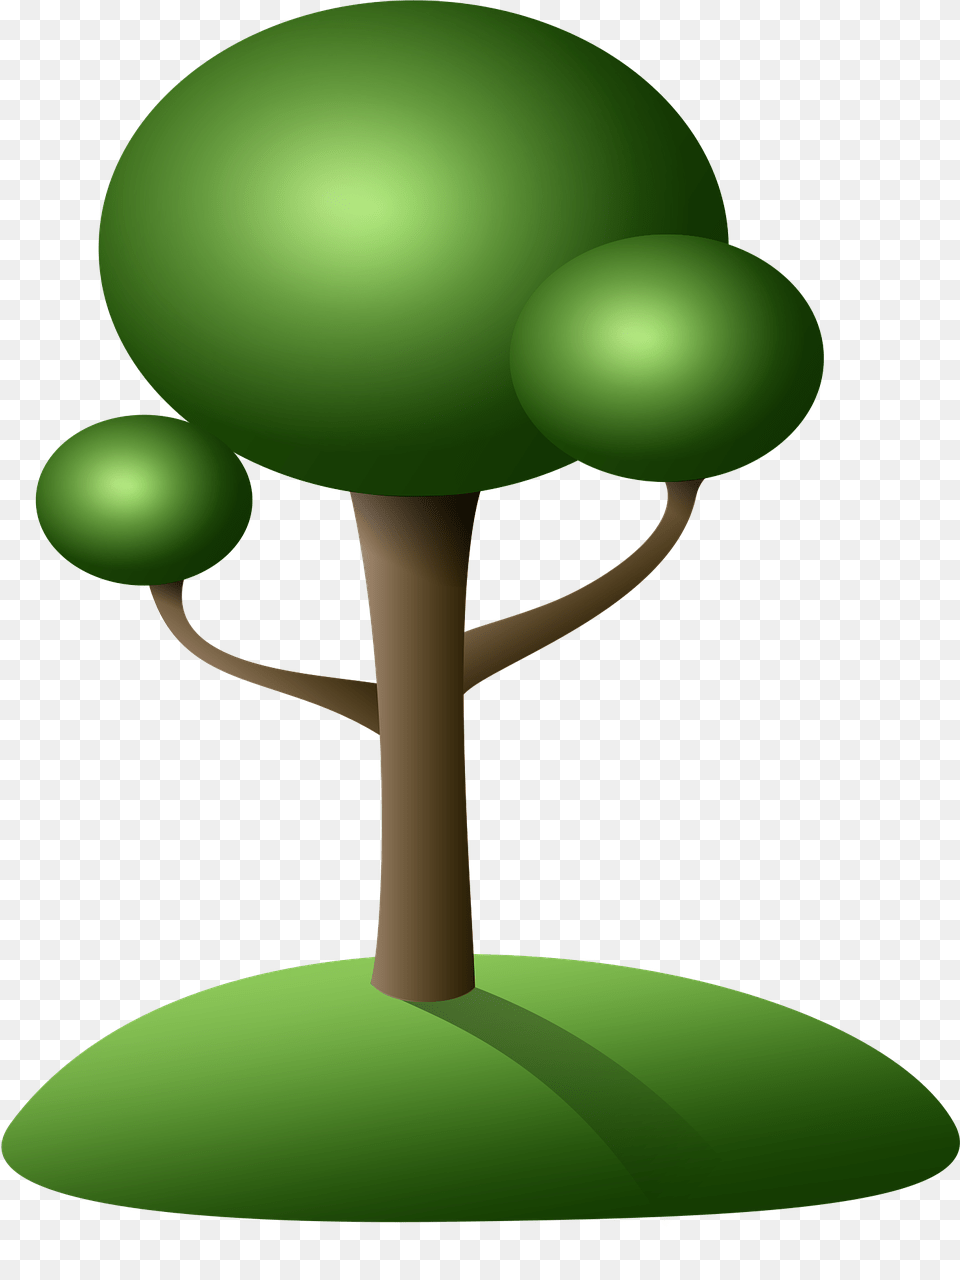 Tree Island Green Cartoon Simple, Sphere, Plant, Balloon Png